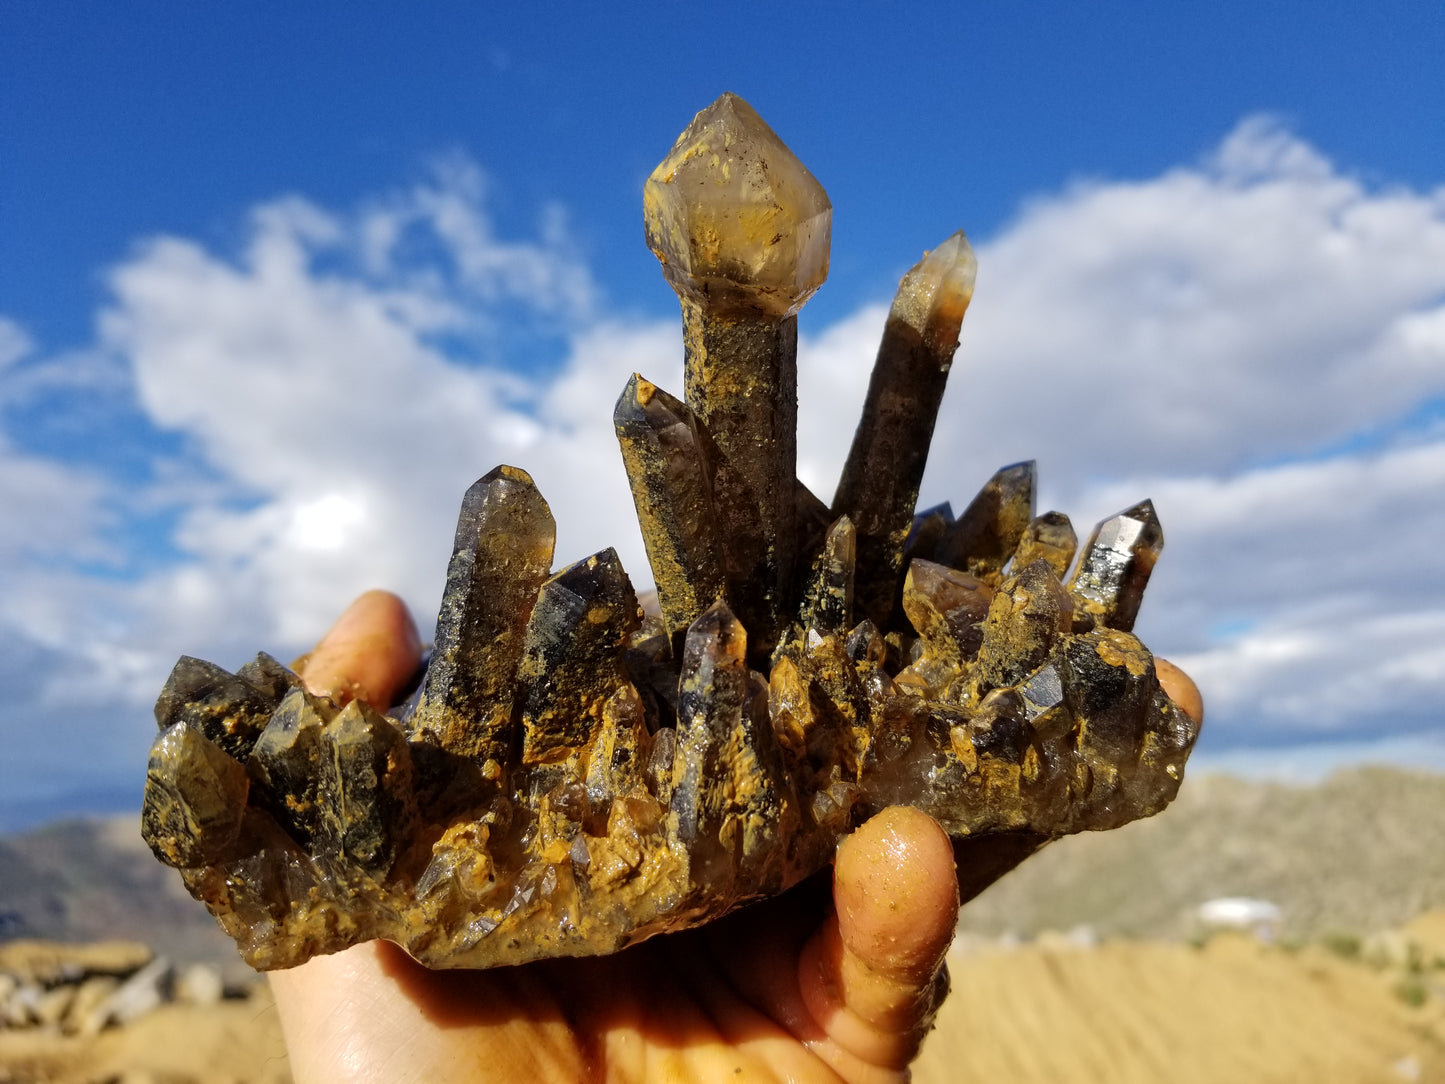 Peak Experience Crystal Mining Adventures